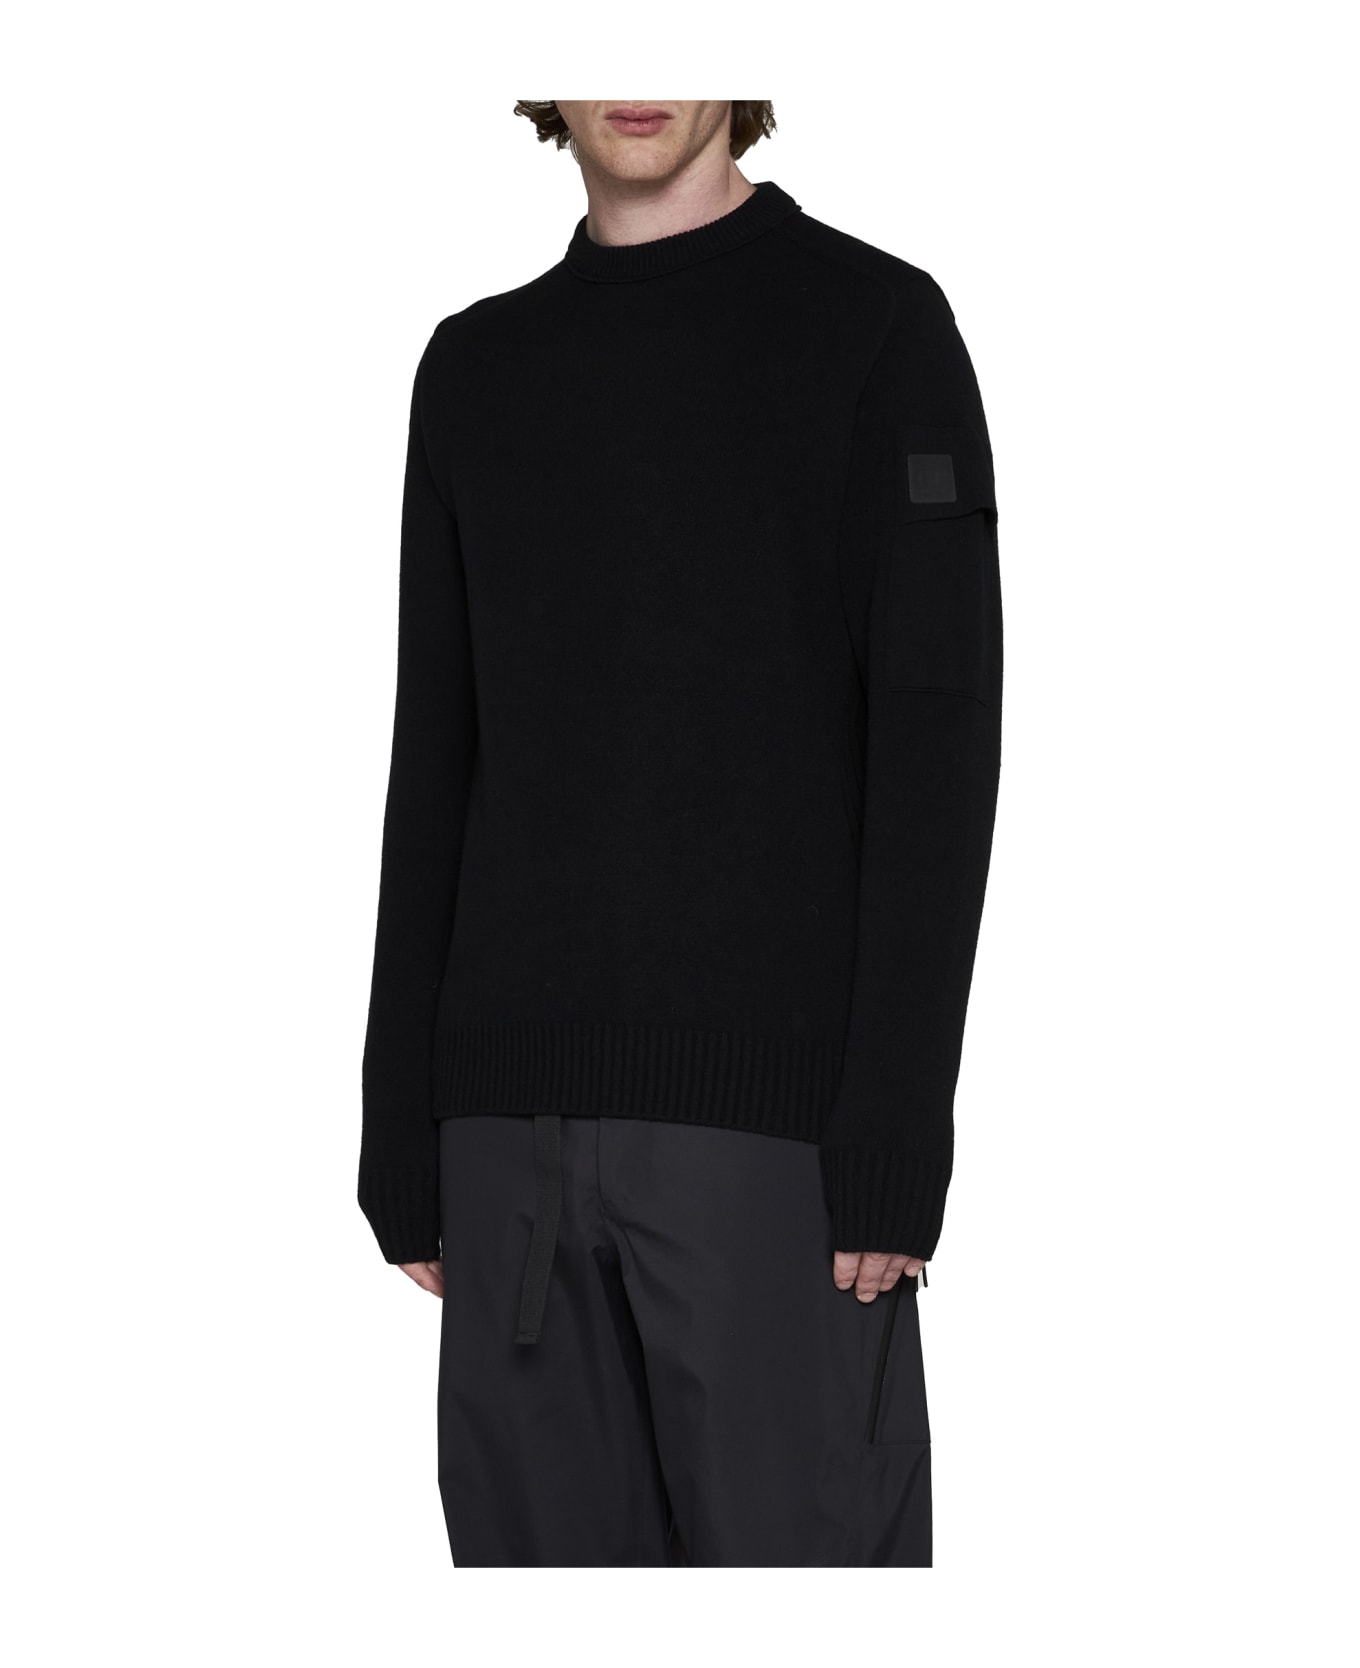 C.P. Company Metropolis Sweater - Black